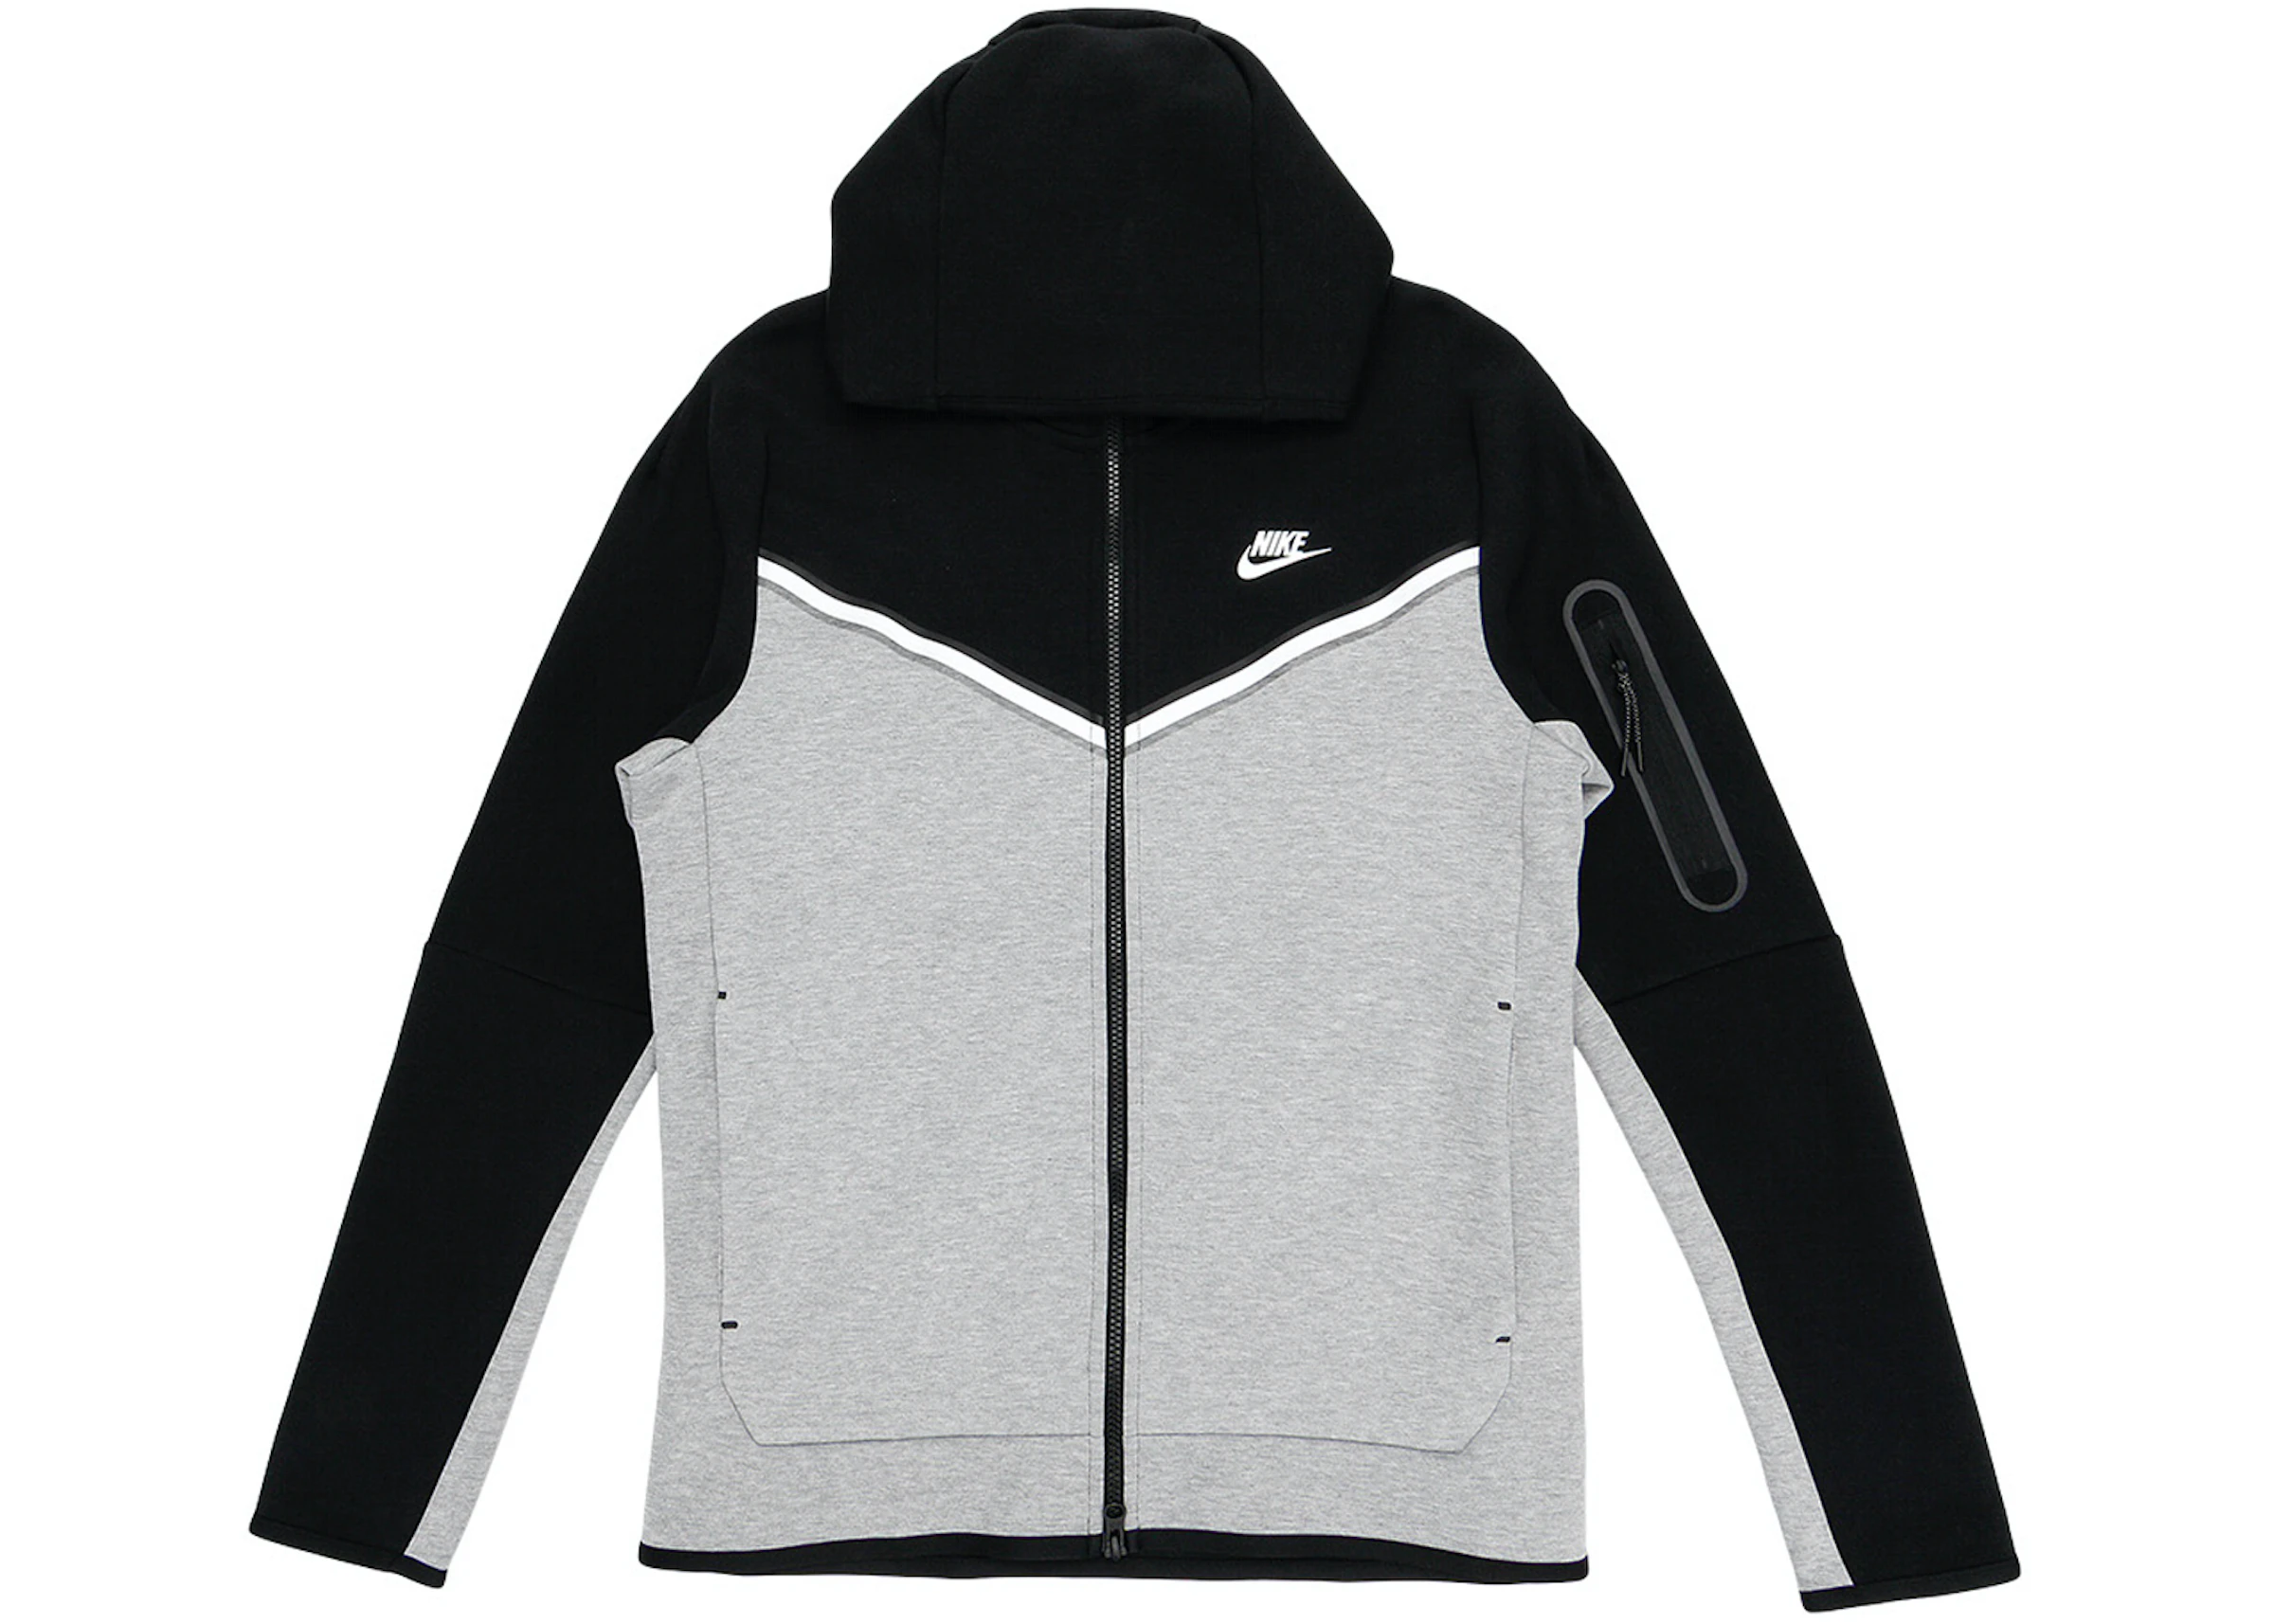 Aftrekken Voornaamwoord Minachting Nike Tech Fleece Full Zip Hoodie Black/Dark Grey Heather/White - US